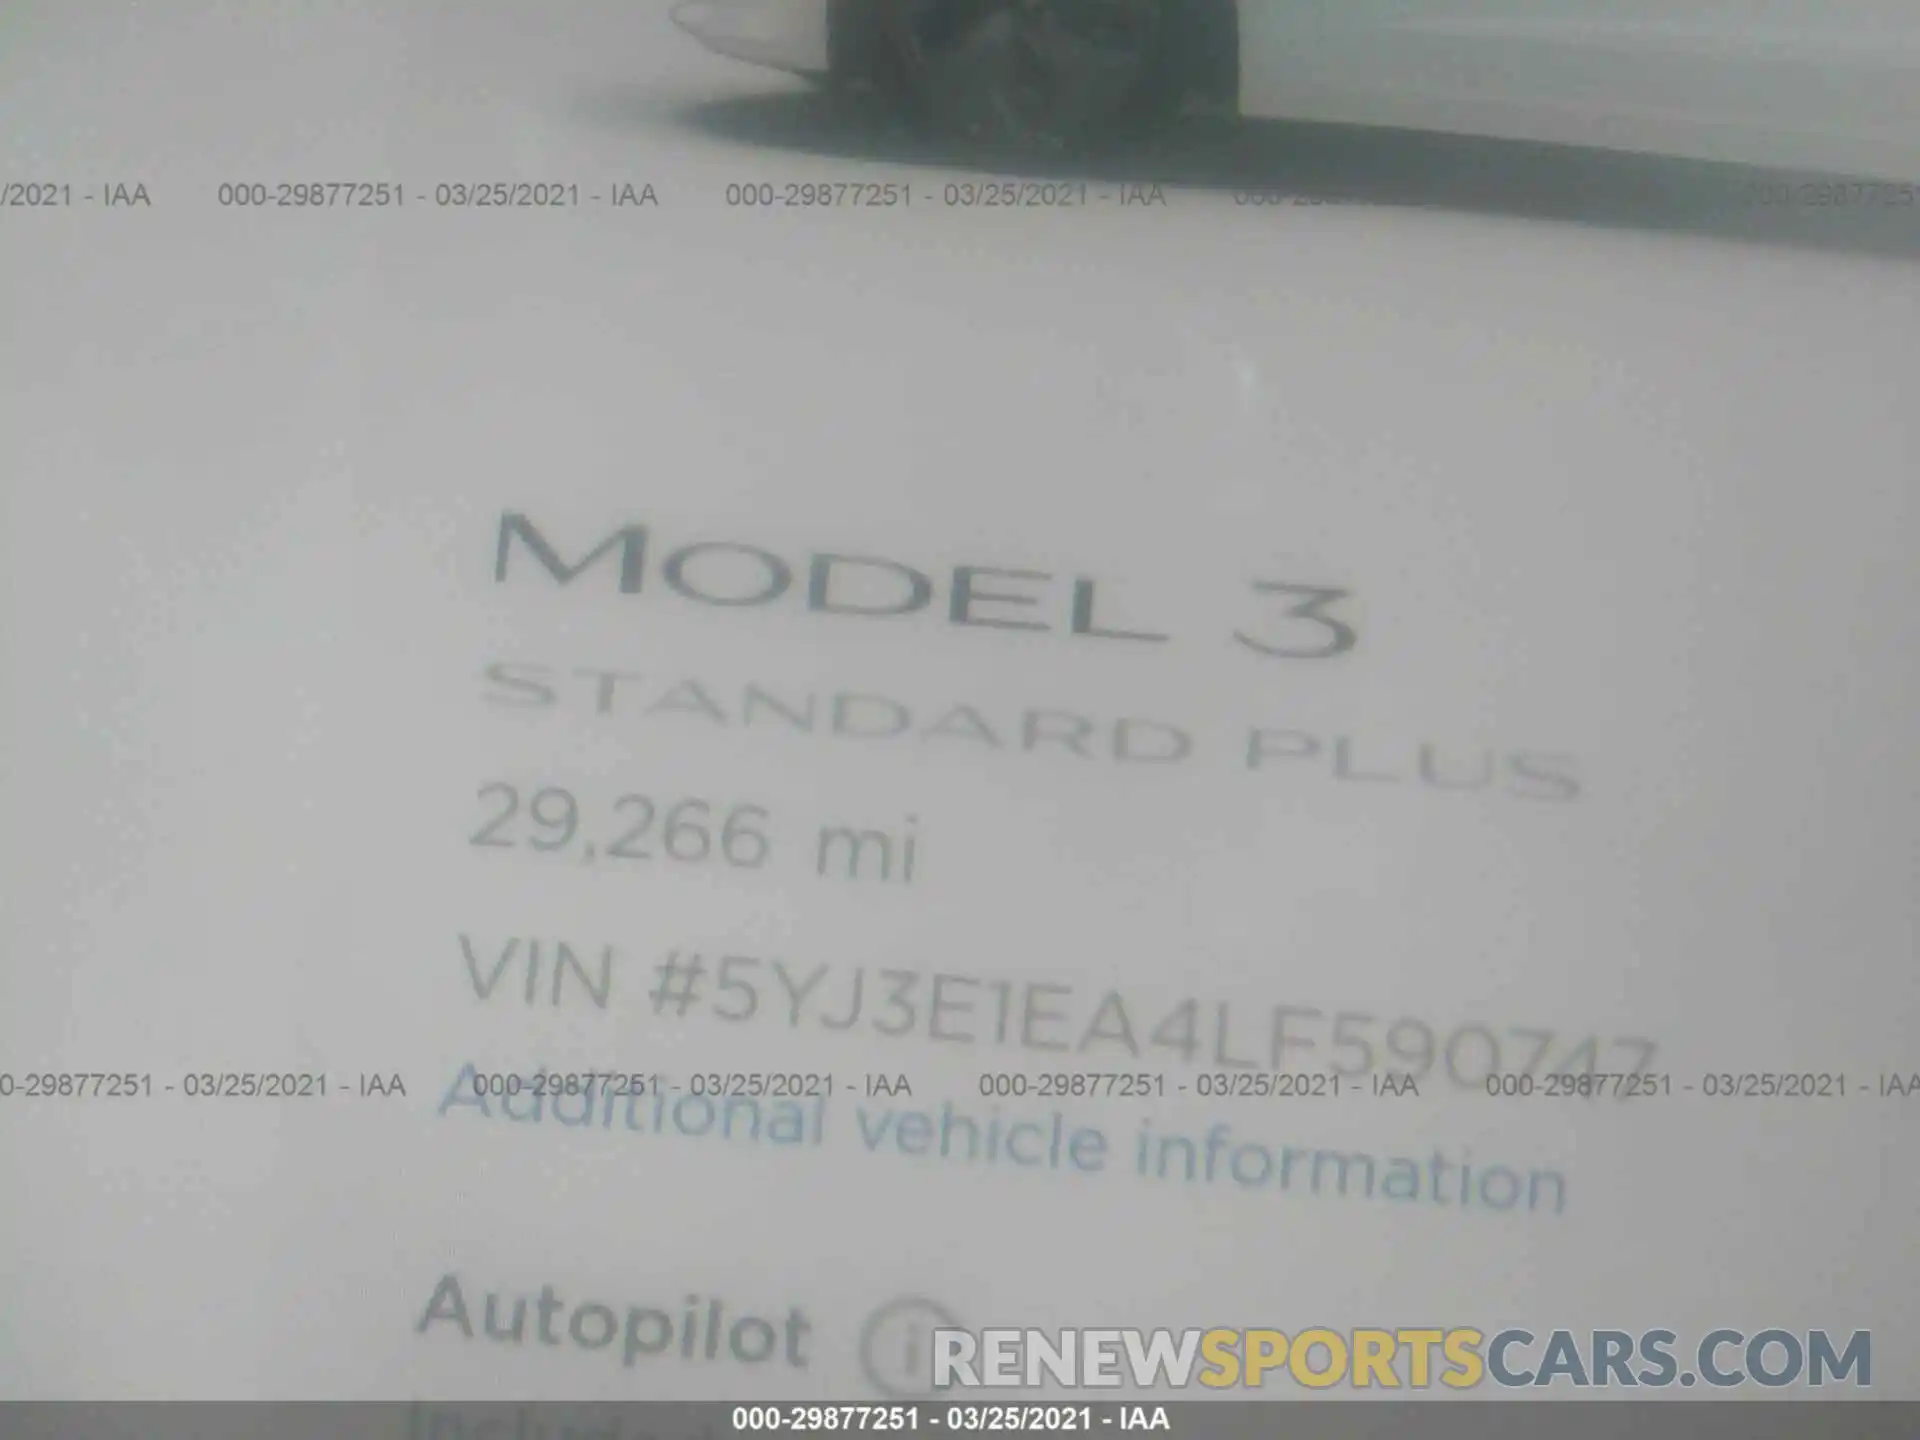 7 Photograph of a damaged car 5YJ3E1EA4LF590747 TESLA MODEL 3 2020